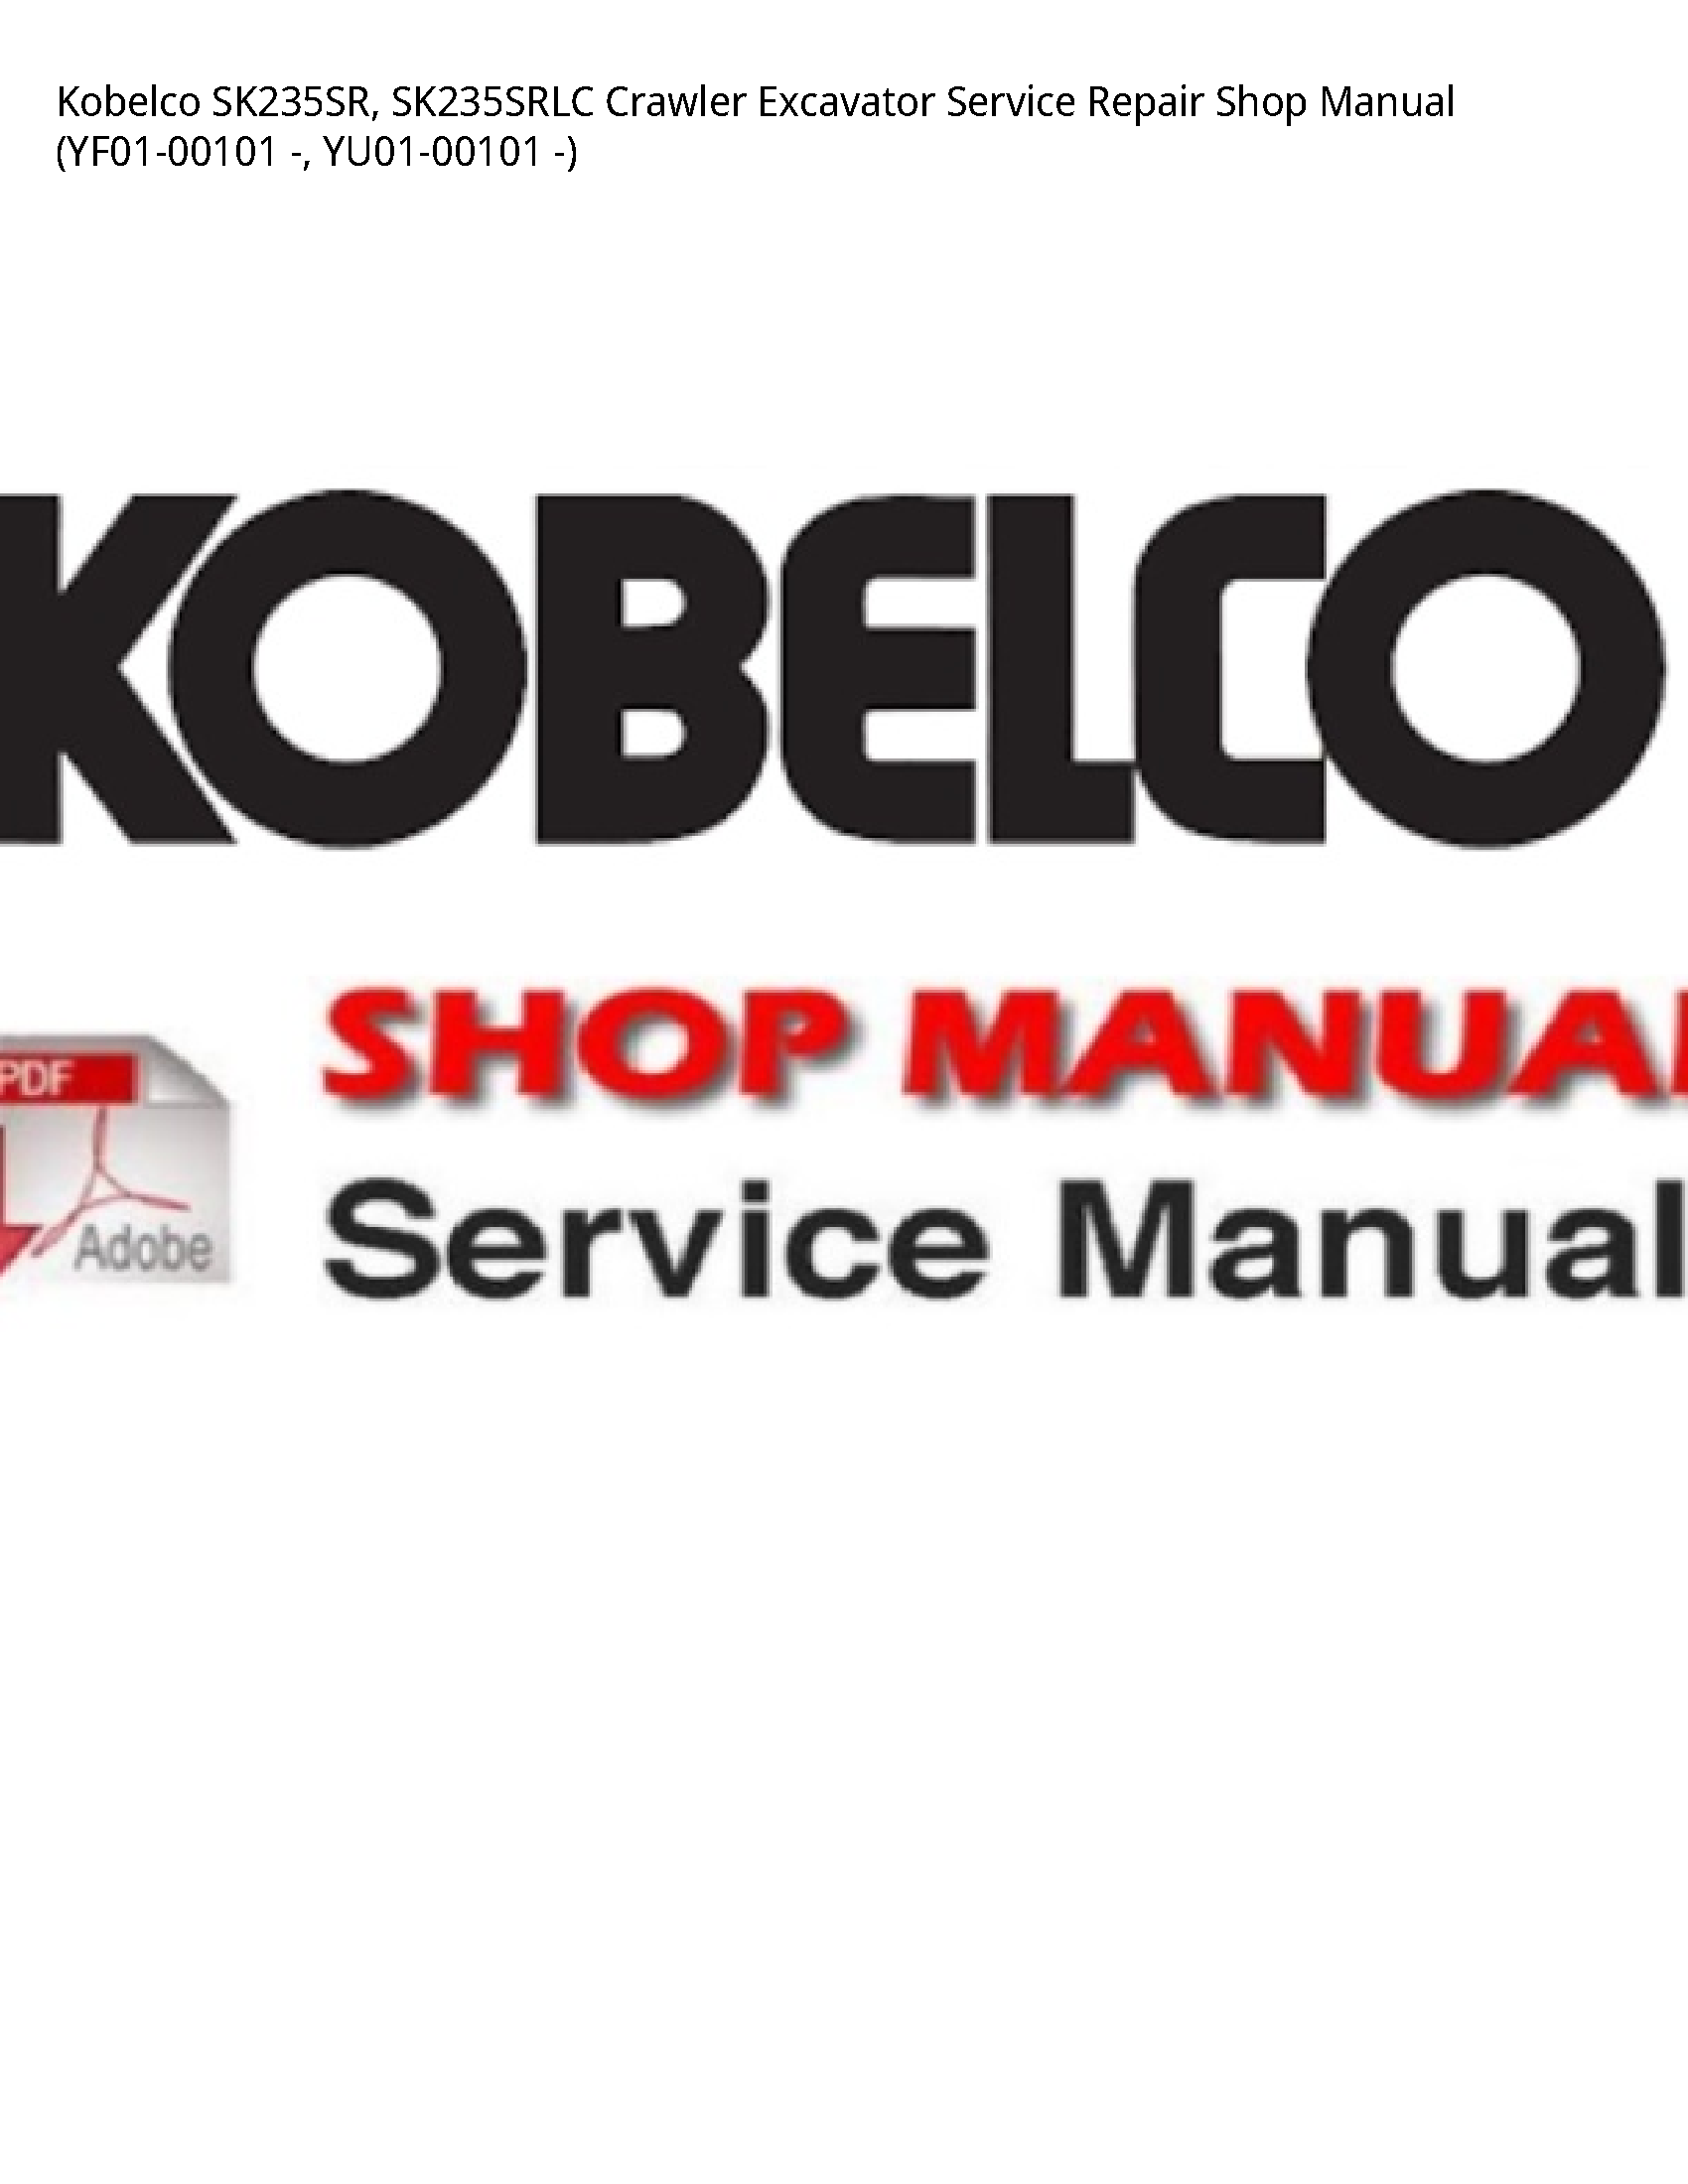 Kobelco SK235SR Crawler Excavator manual